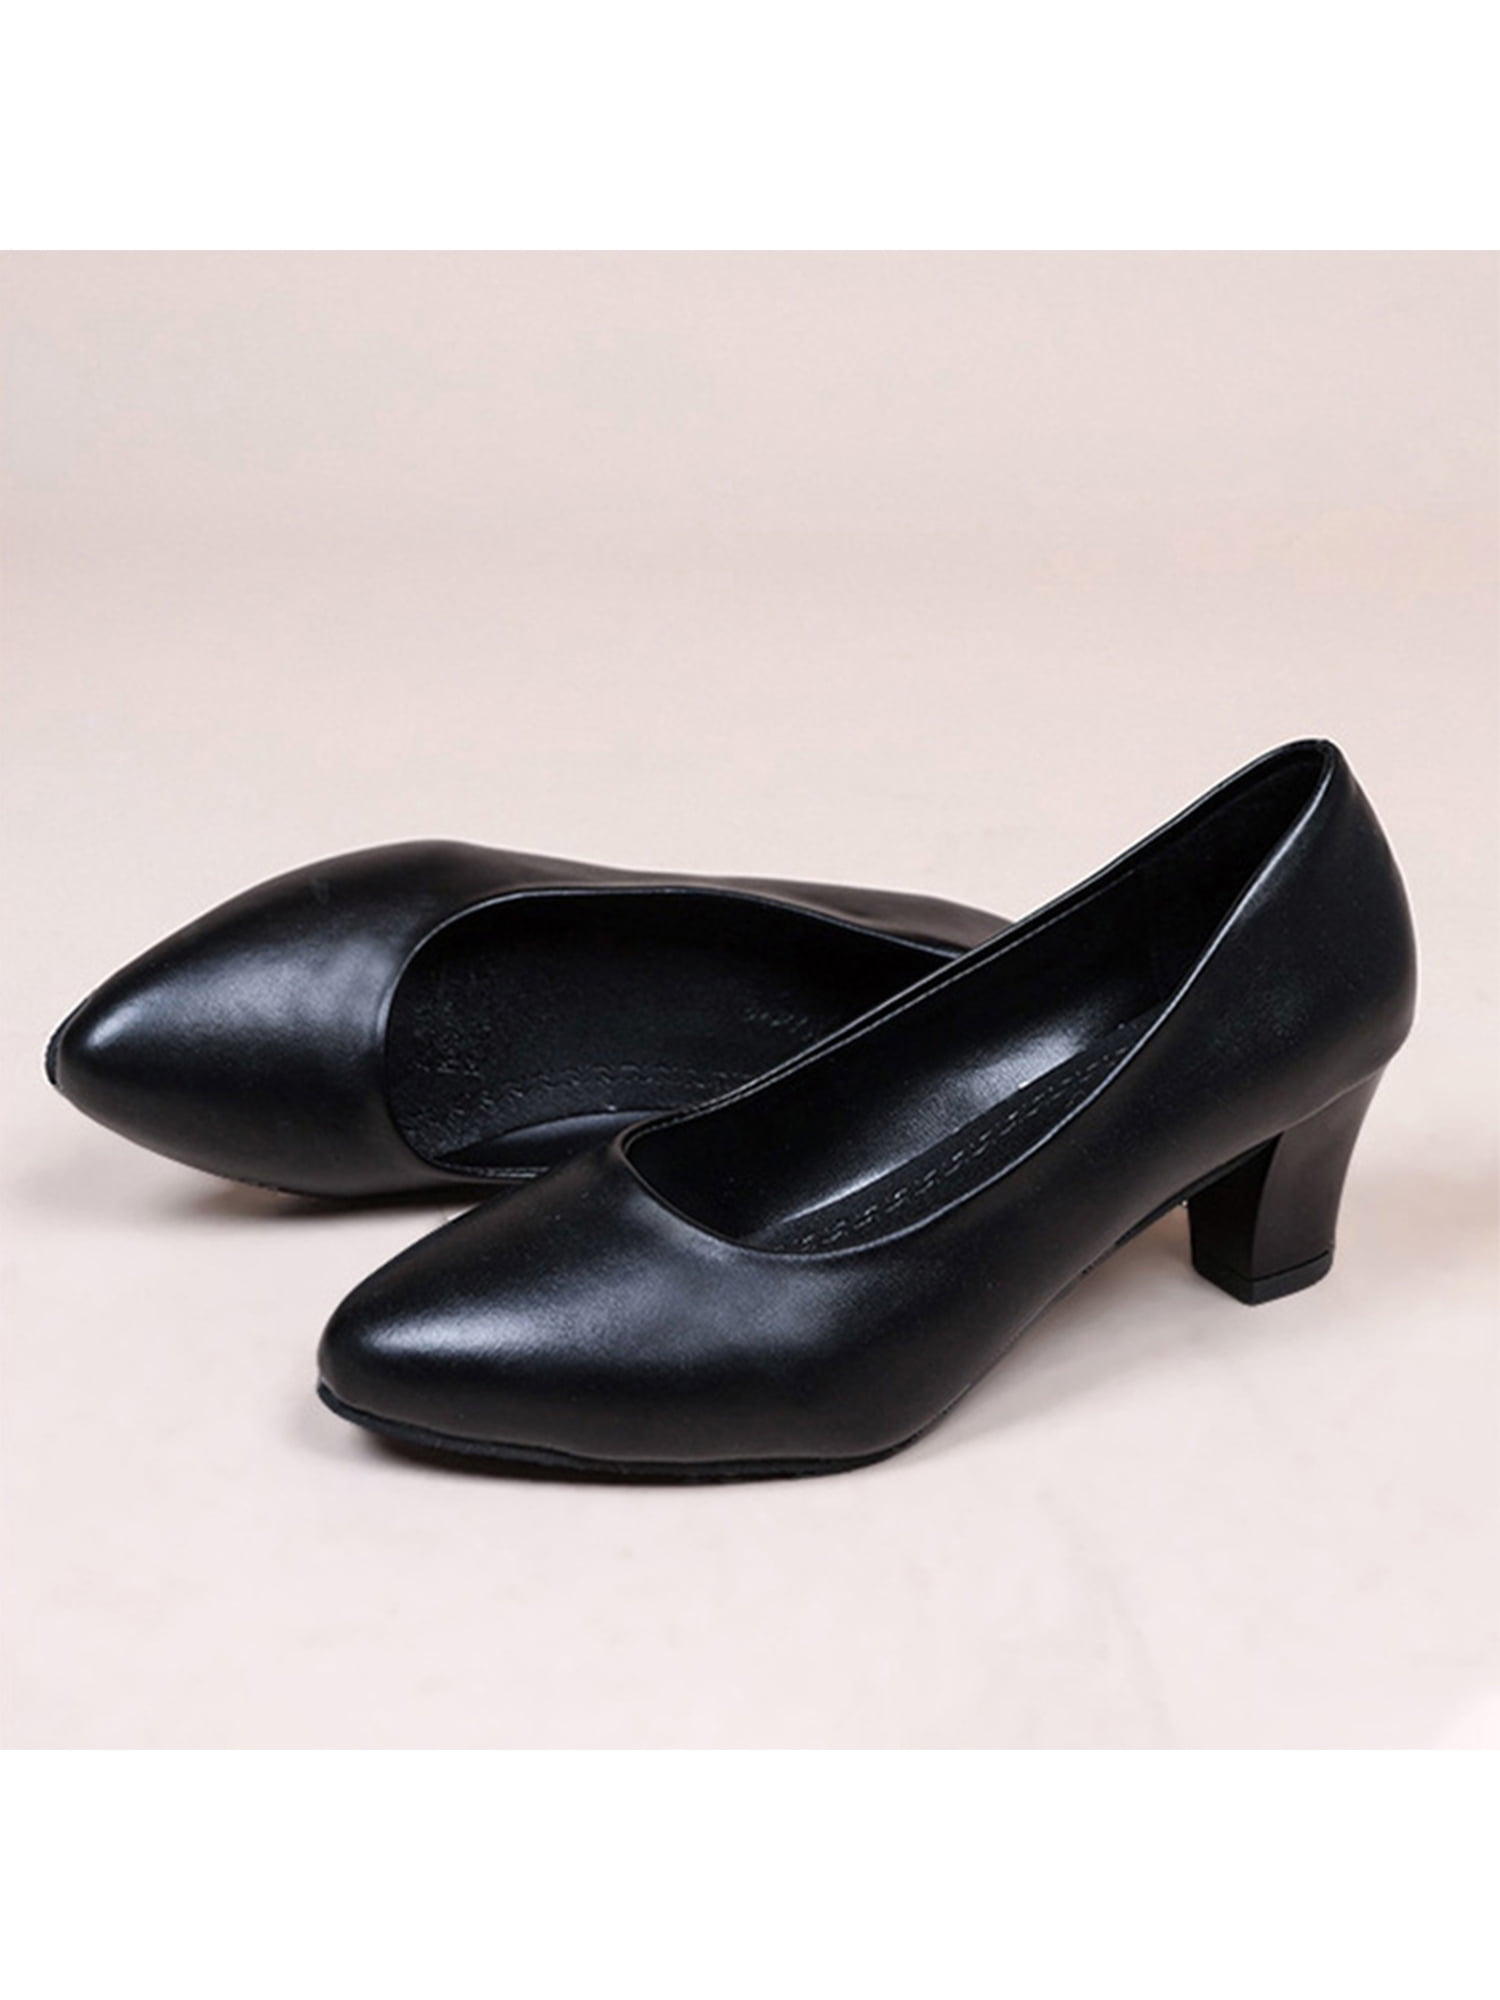 Black Patent Leather High Heels Office Stiletto Heel Pumps|FSJshoes